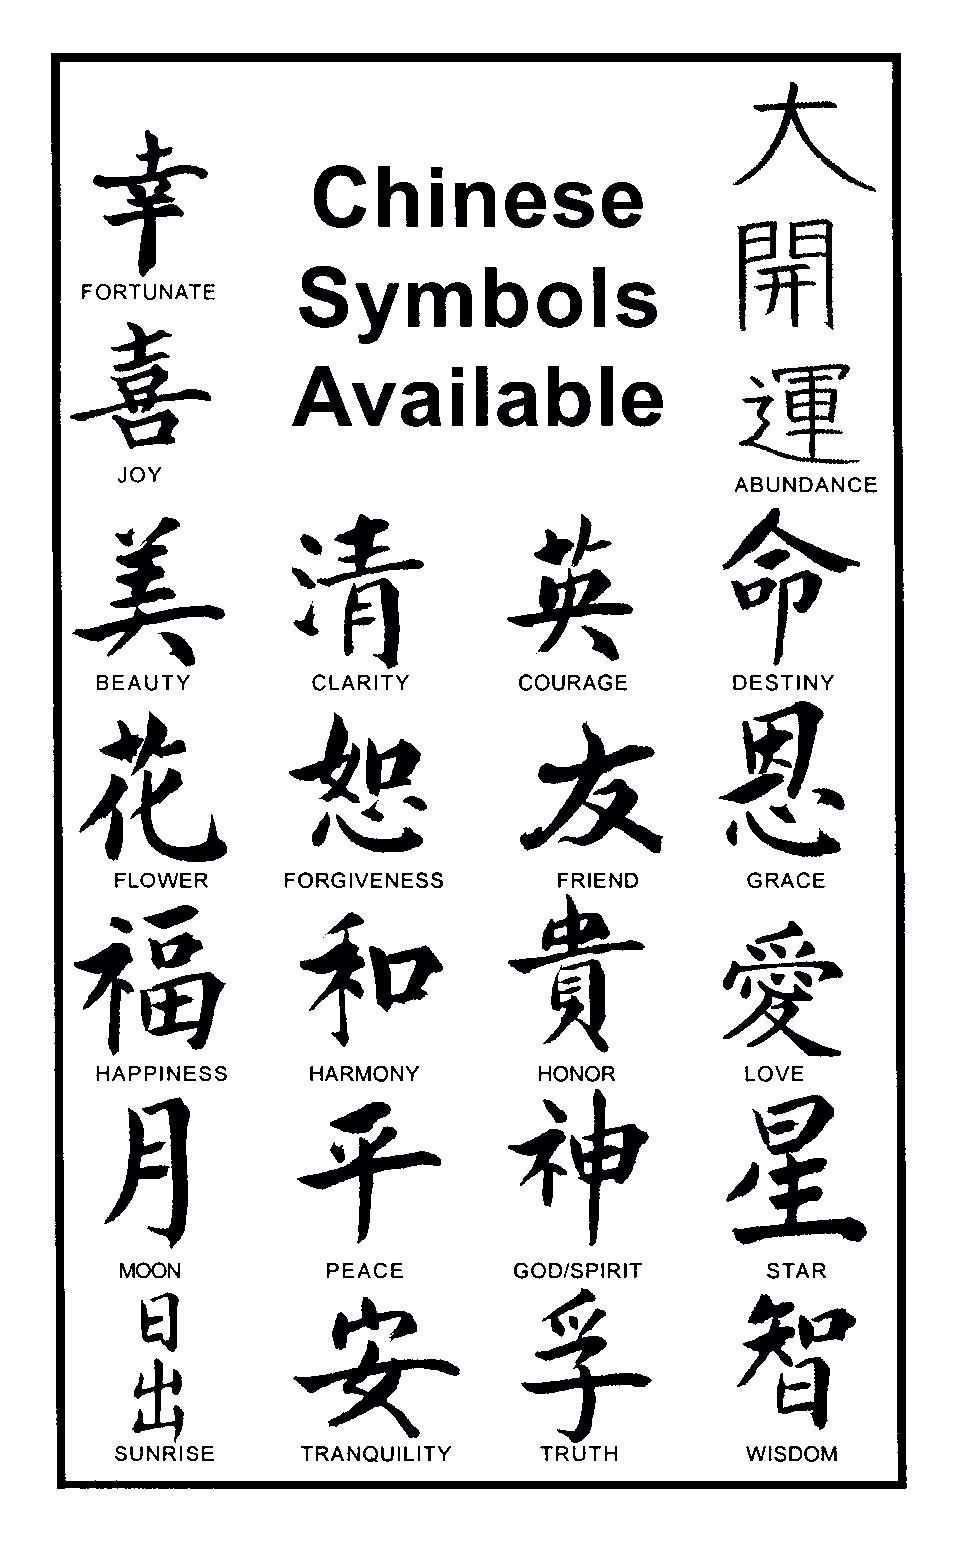 More Chinese Symbols Chinese Symbol Tattoos Chinese Symbols Chinese Words